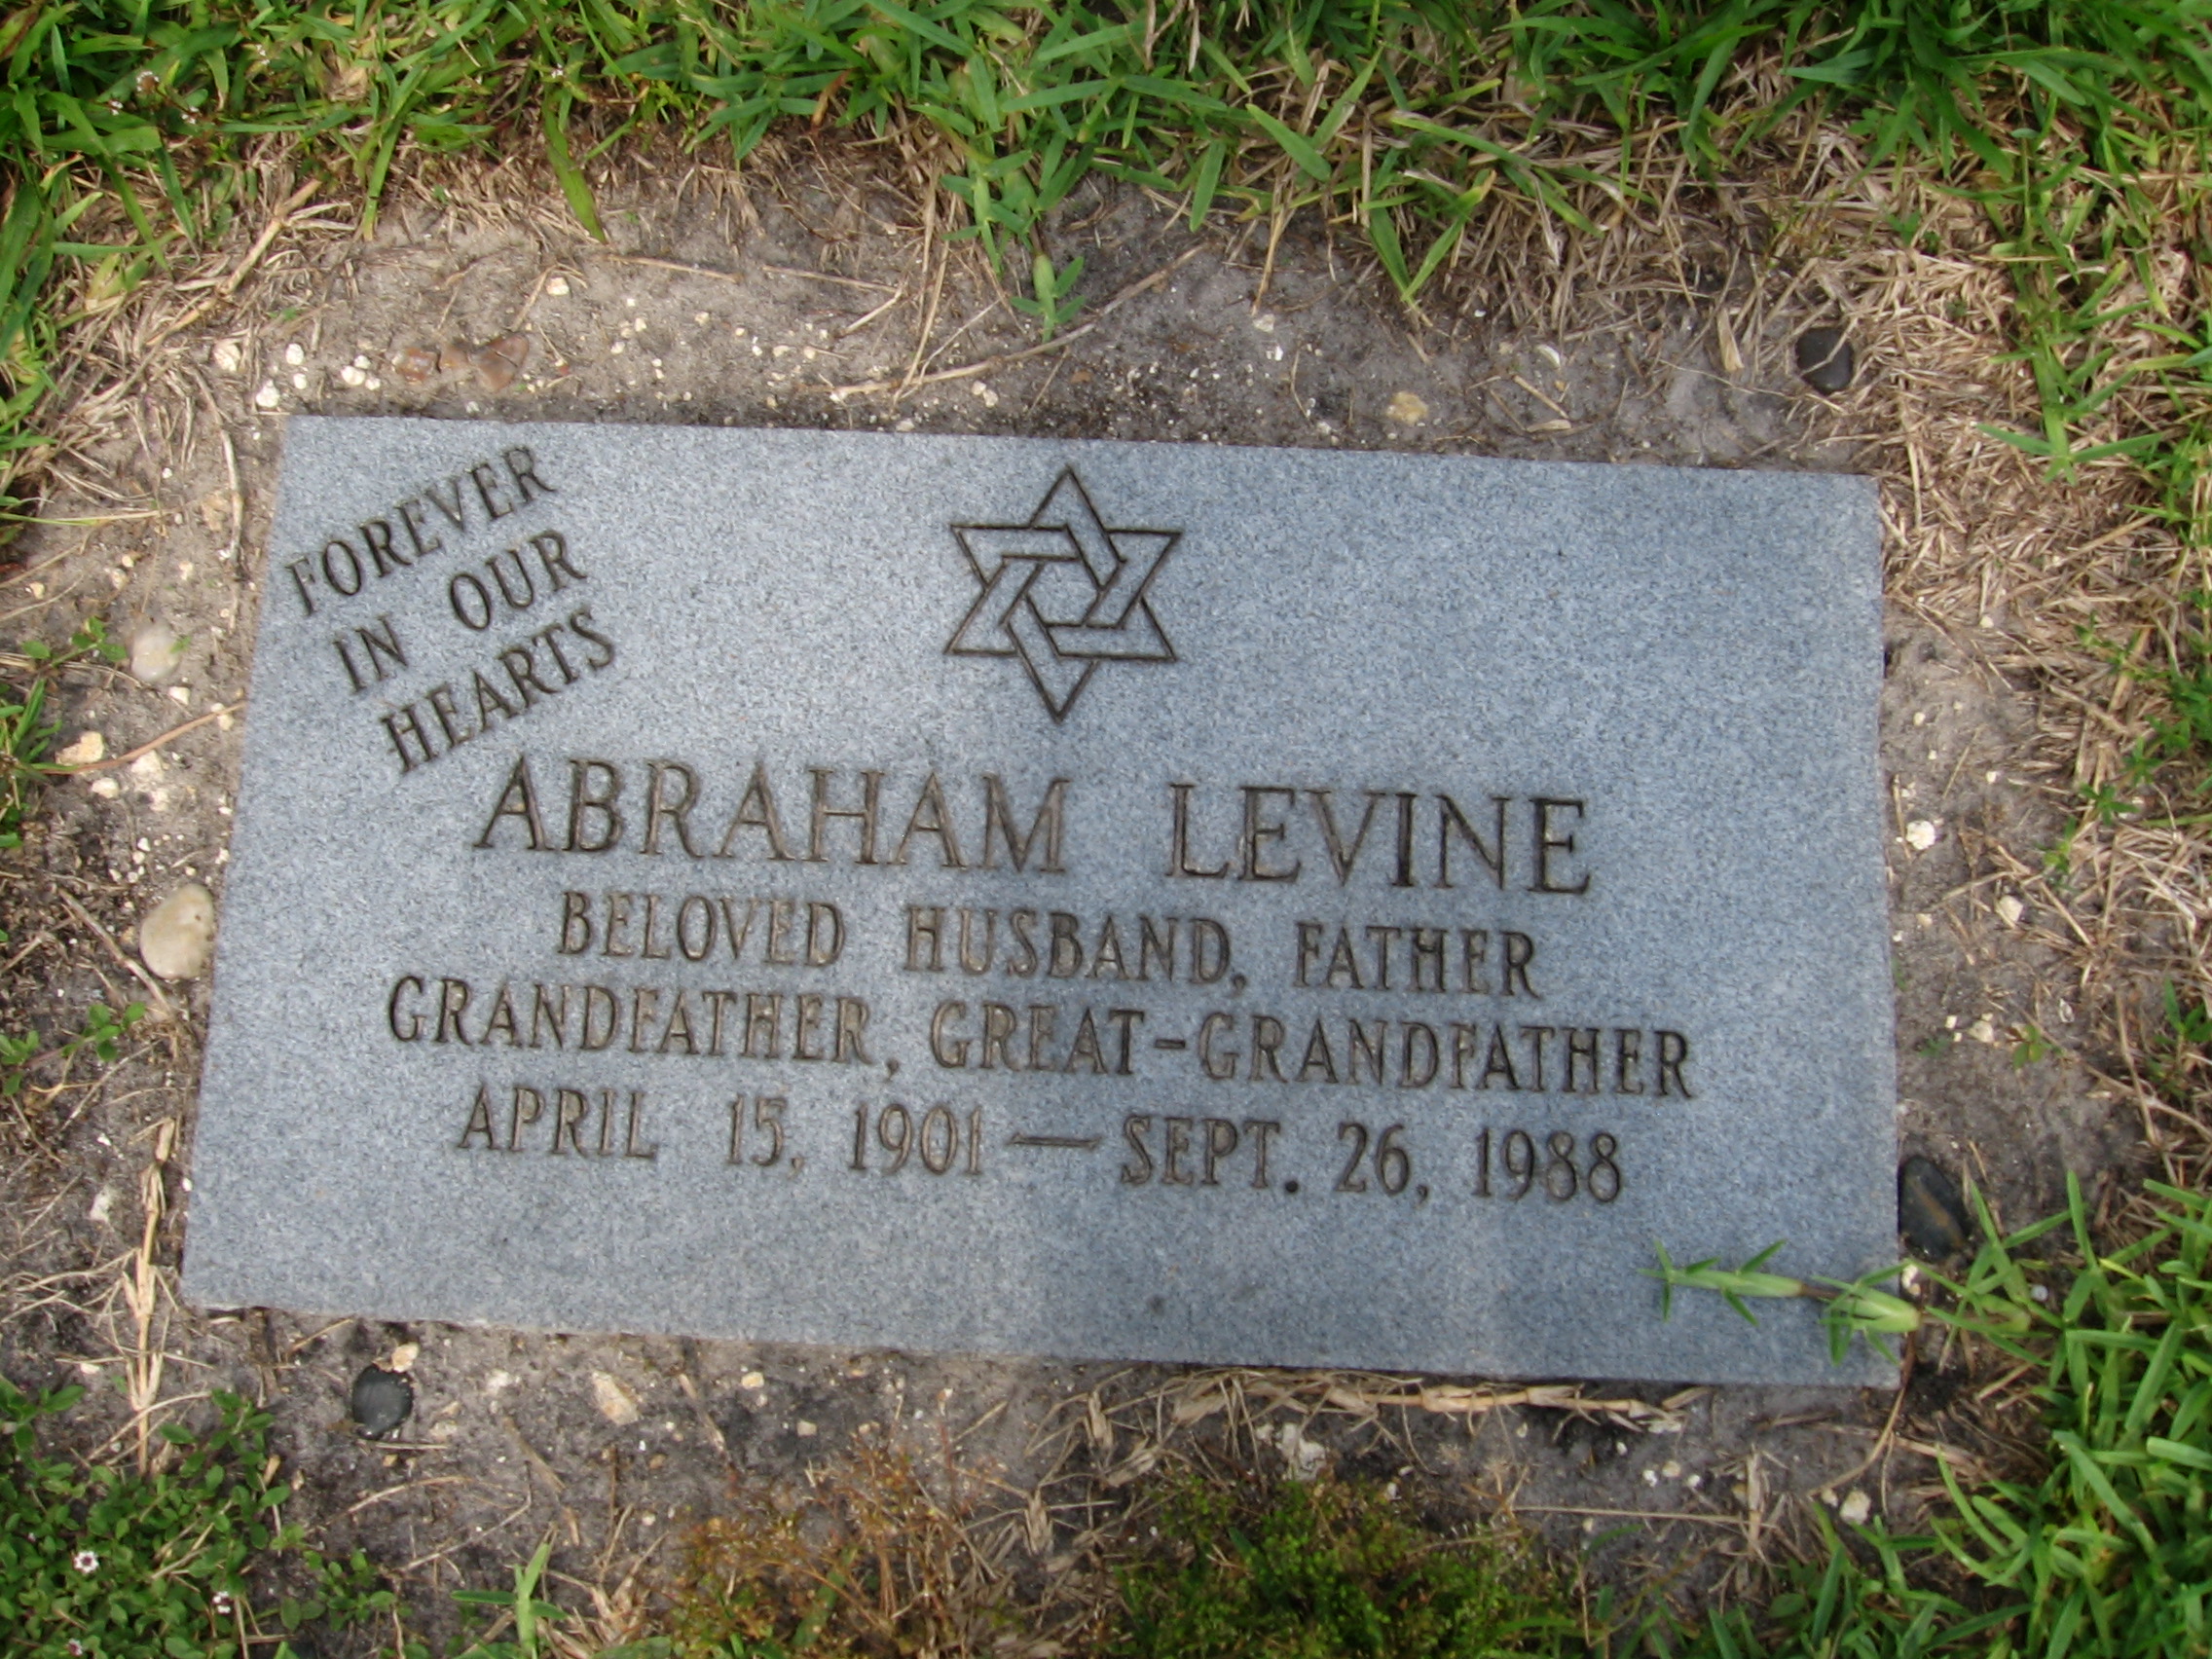 Abraham Levine